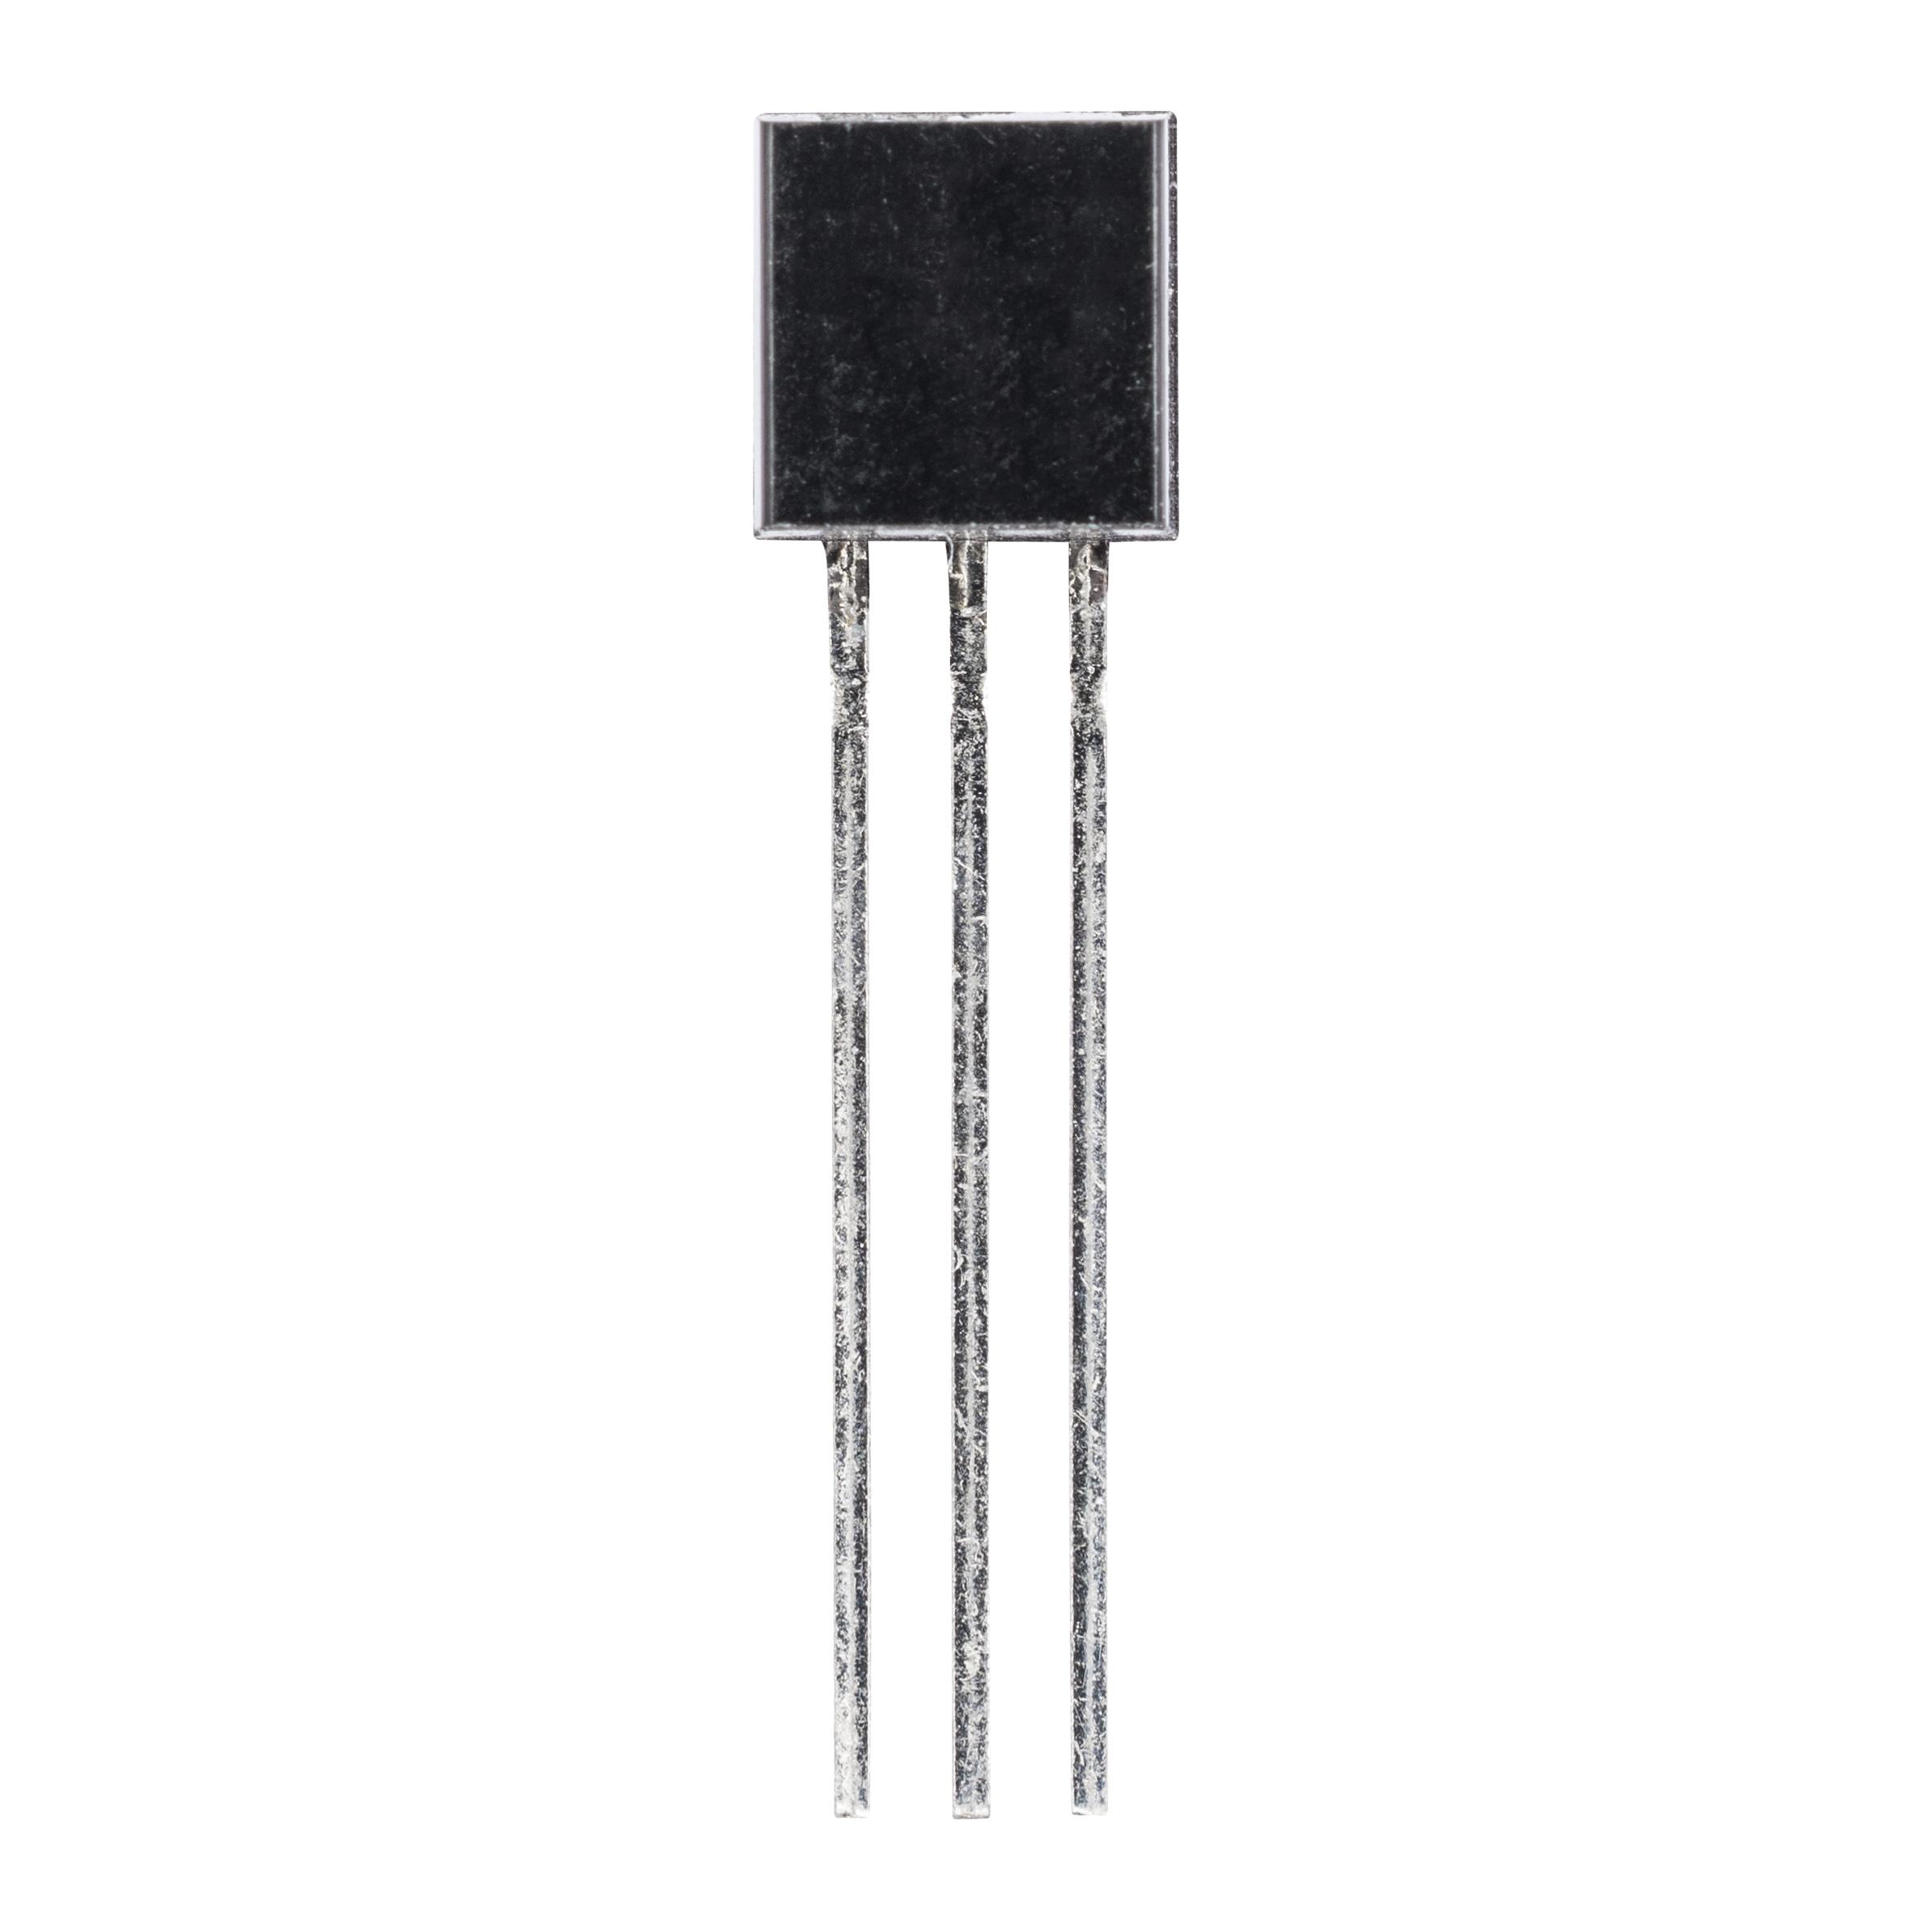 2N5551-Y (транзистор биполярный NPN)